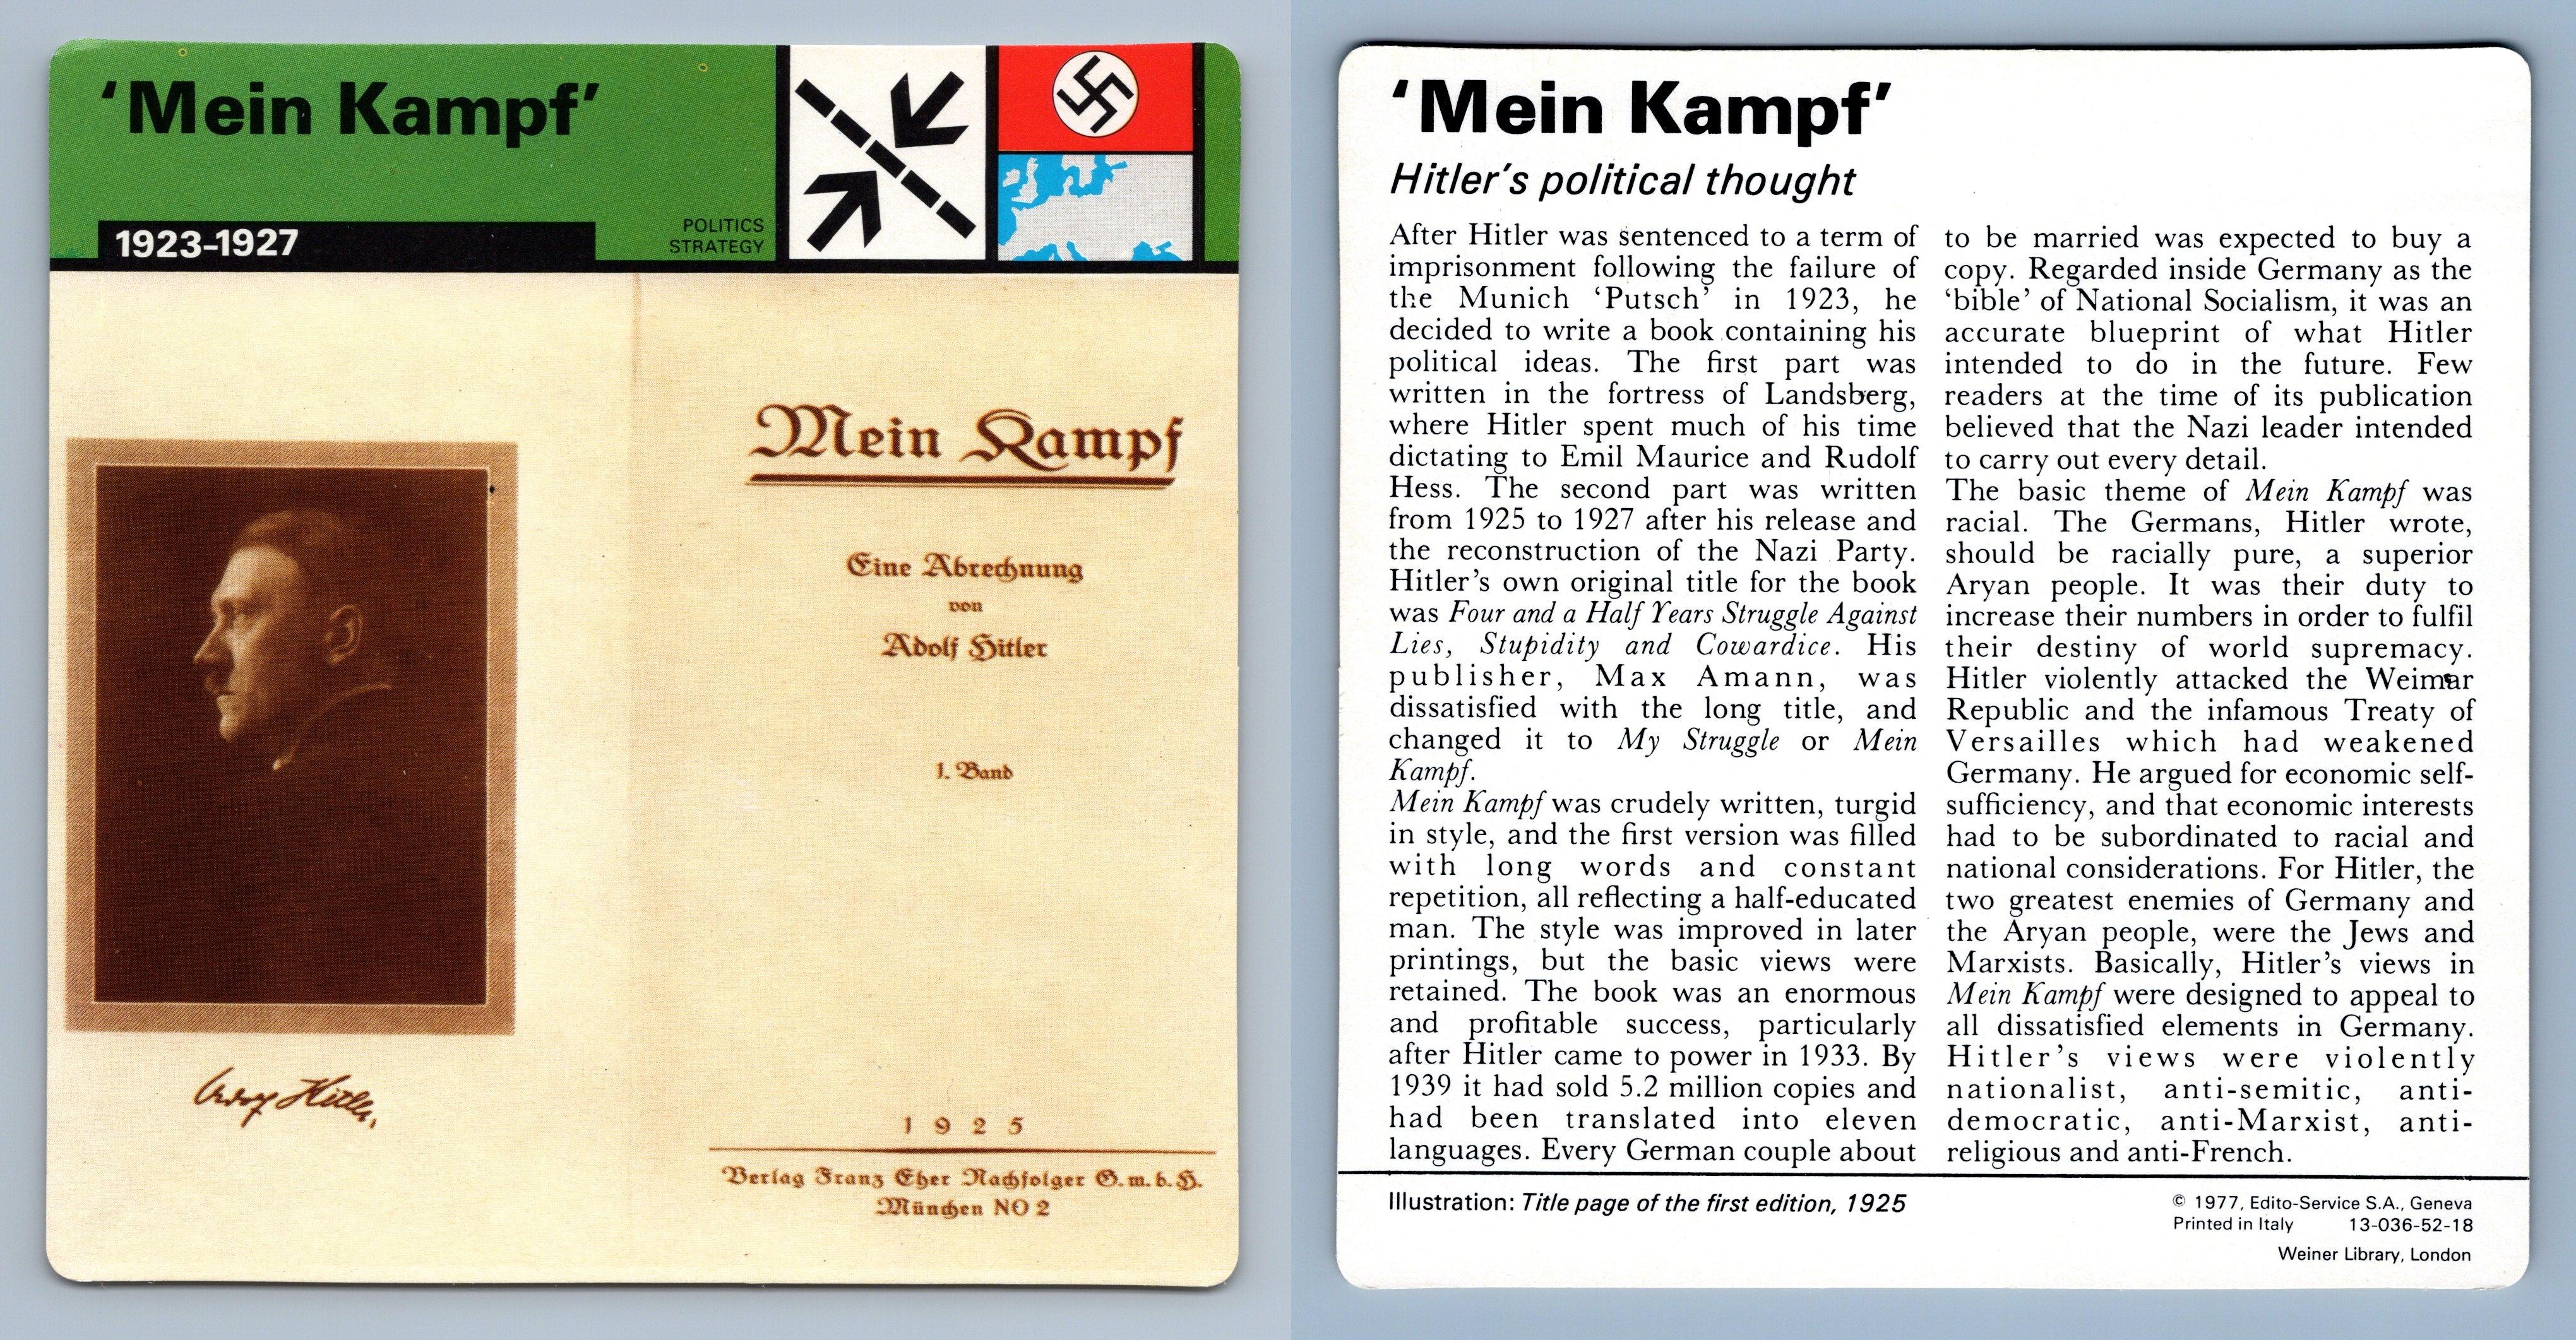 WW2 Edito-Service SA 1977 Card 1923-27 Strategy Politics 'Mein Kamf'